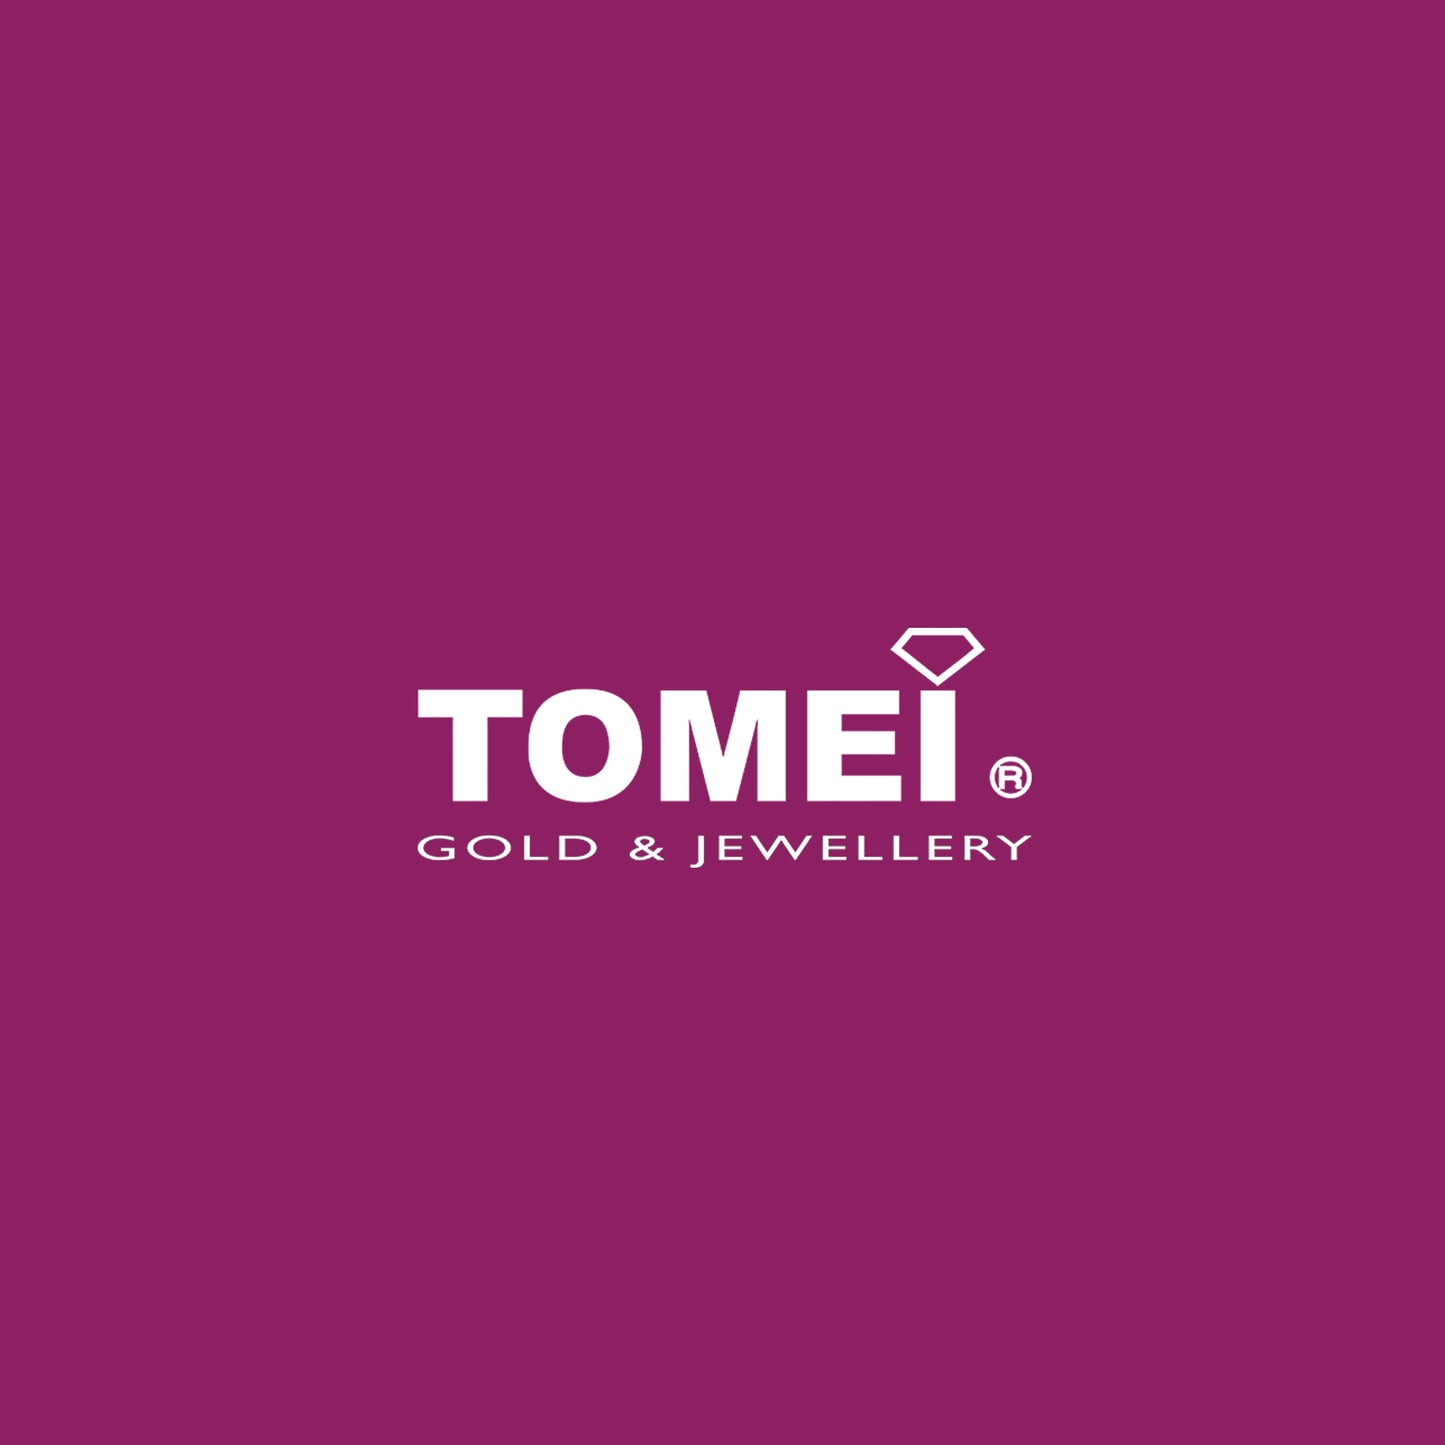 TOMEI Gracius Pendant Set, Pearl Diamond White Gold 585 (P6186)